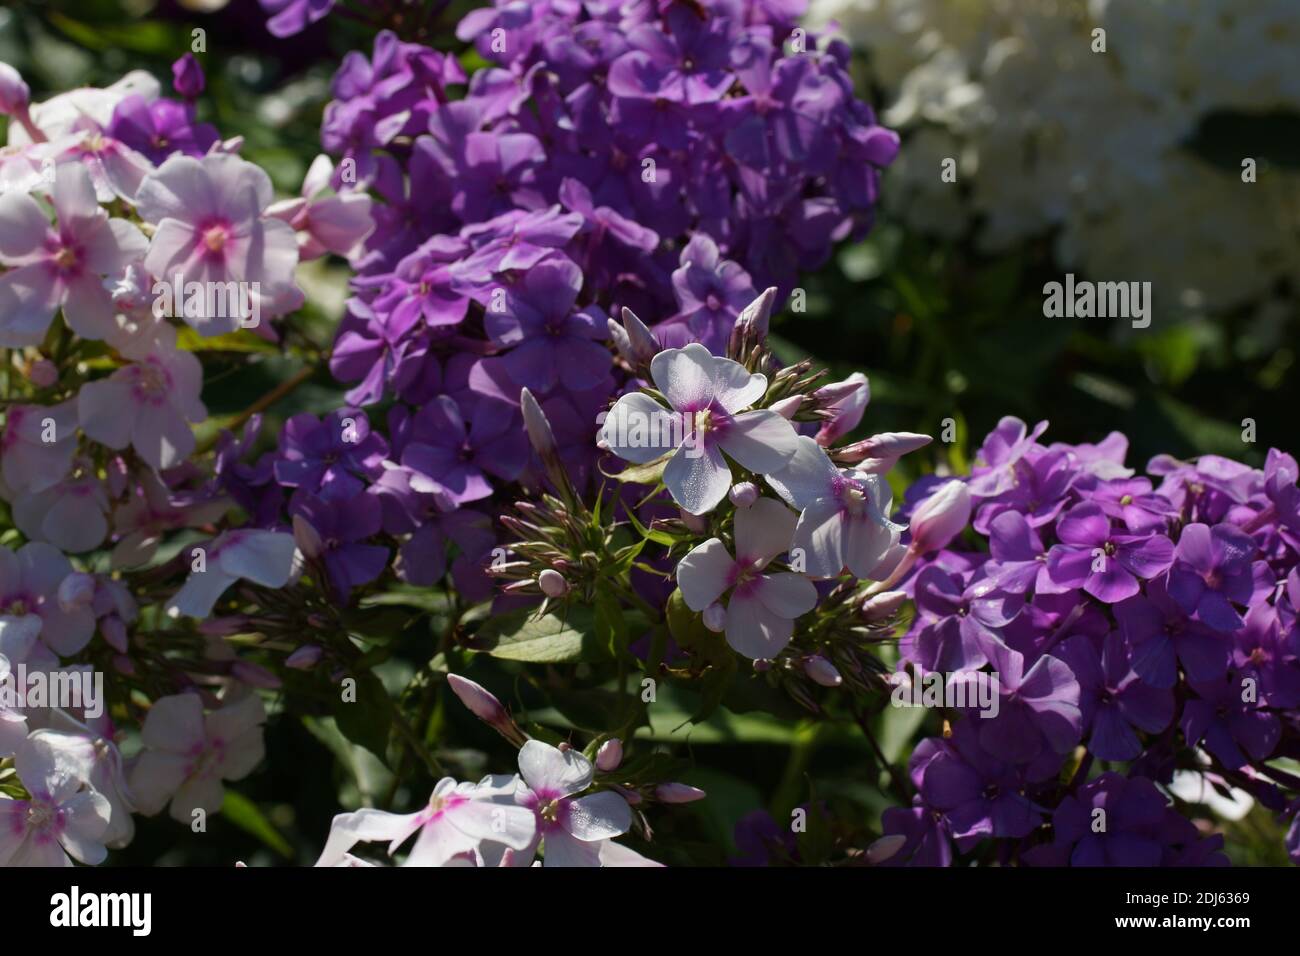 Multi-colored phlox in the photo. Phlox paniculata, fall phlox, garden phlox, perennial phlox.  Fragment of a summer garden in bloom. Stock Photo